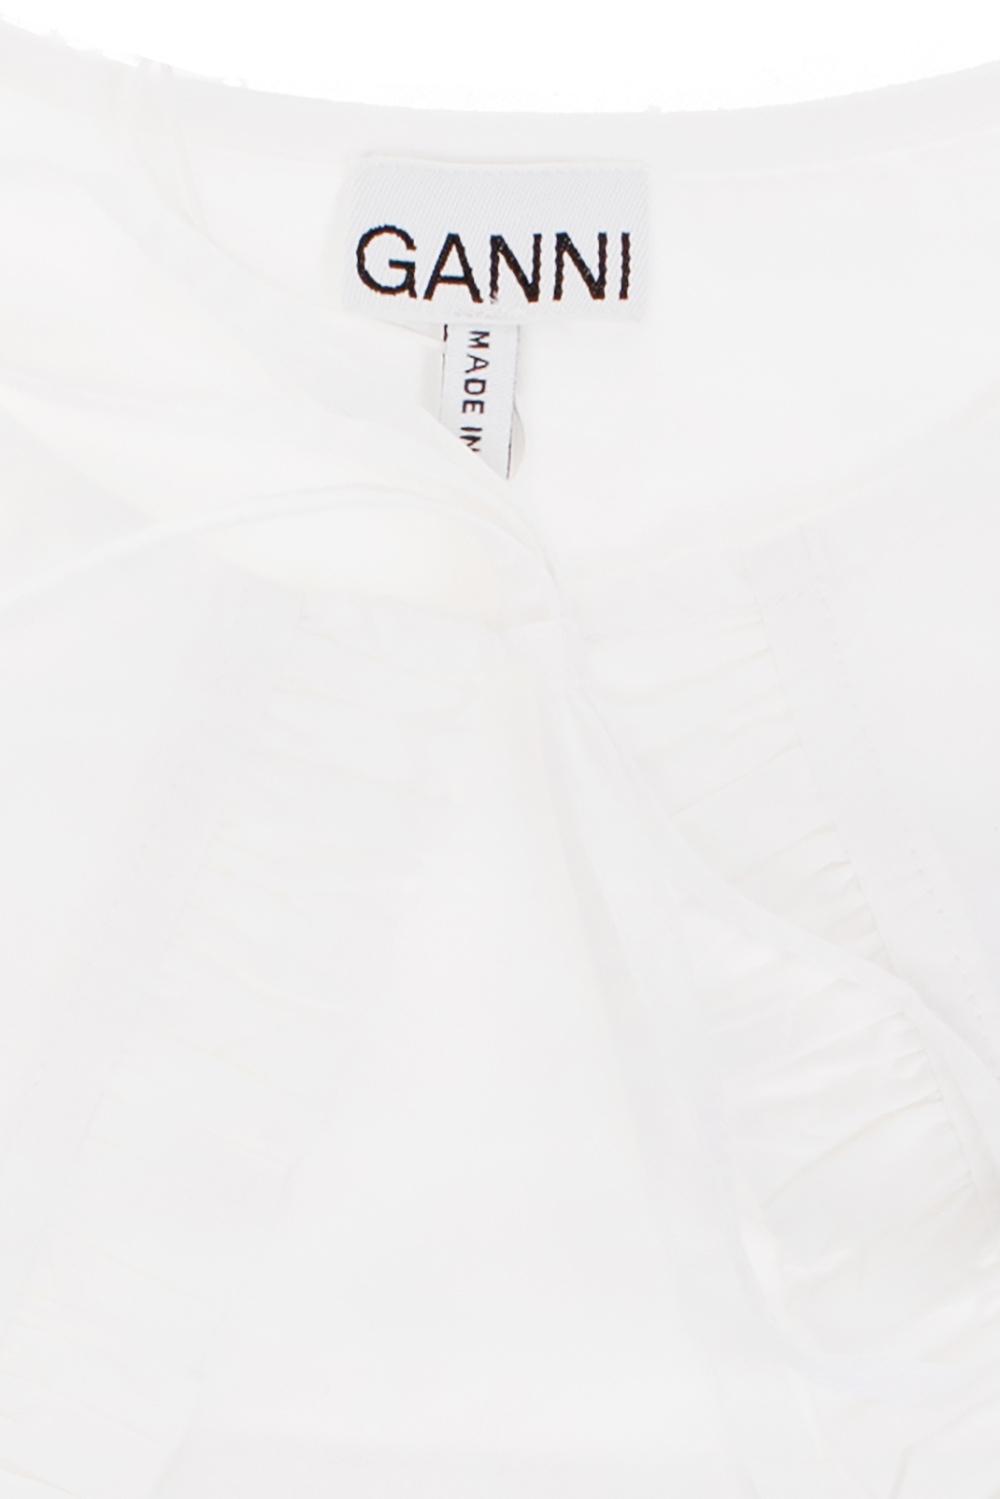 Ganni Choose your location